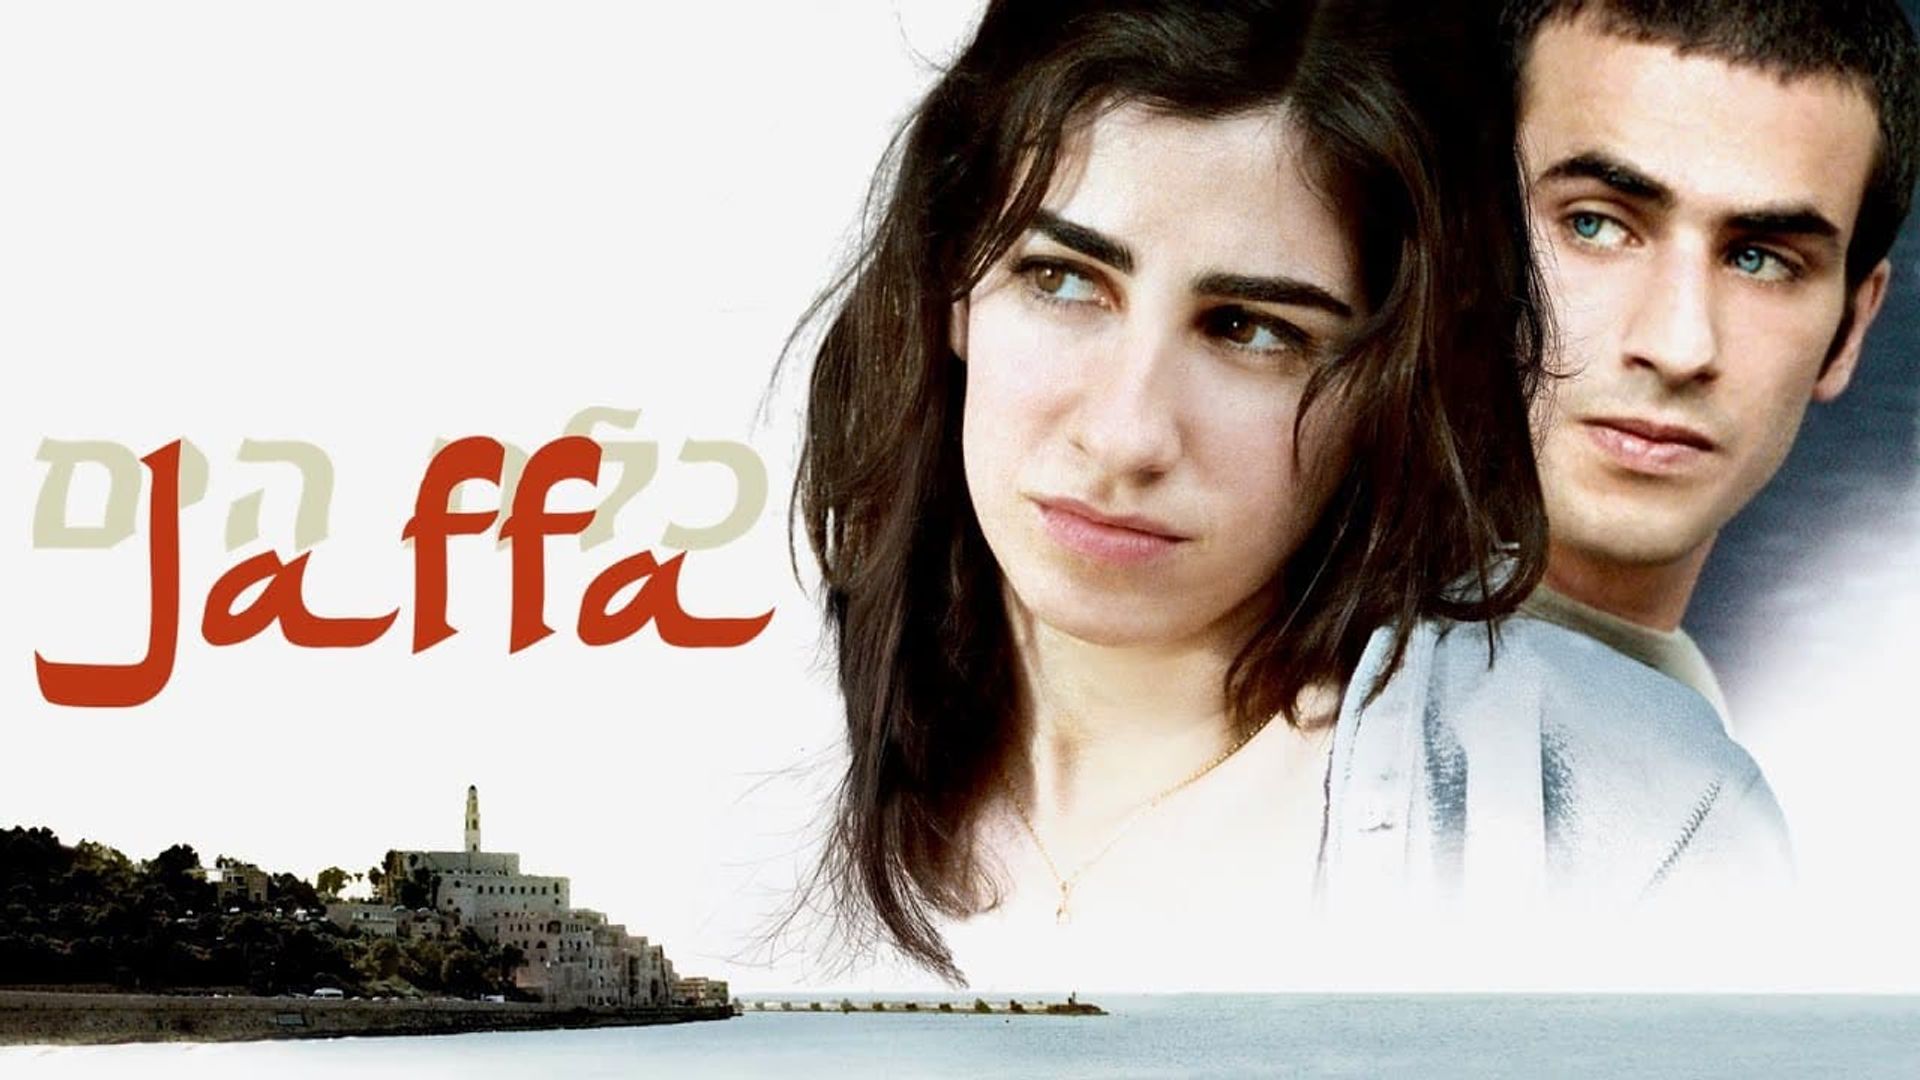 Jaffa background